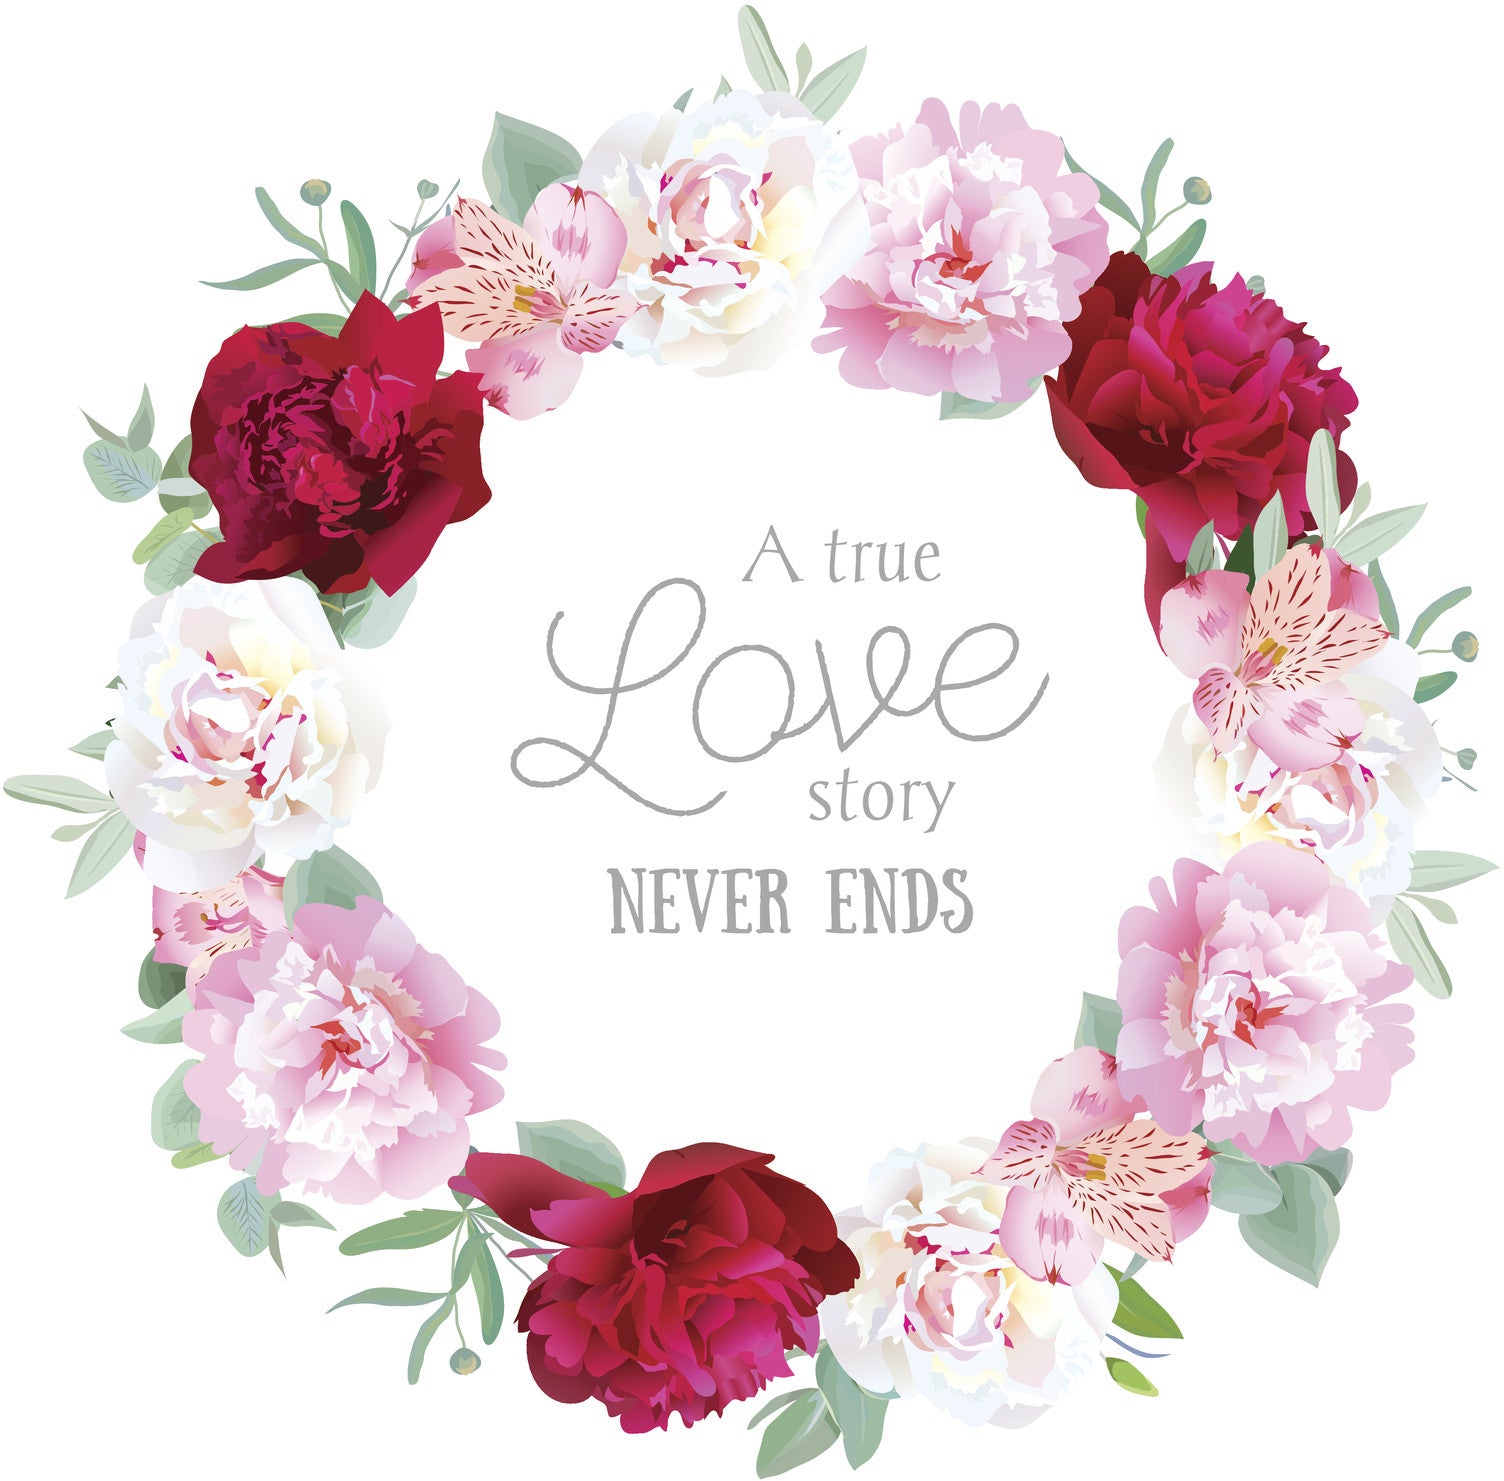 A True Love Story Never Ends Hipster Flower Wreath Border Vinyl Decal Sticker